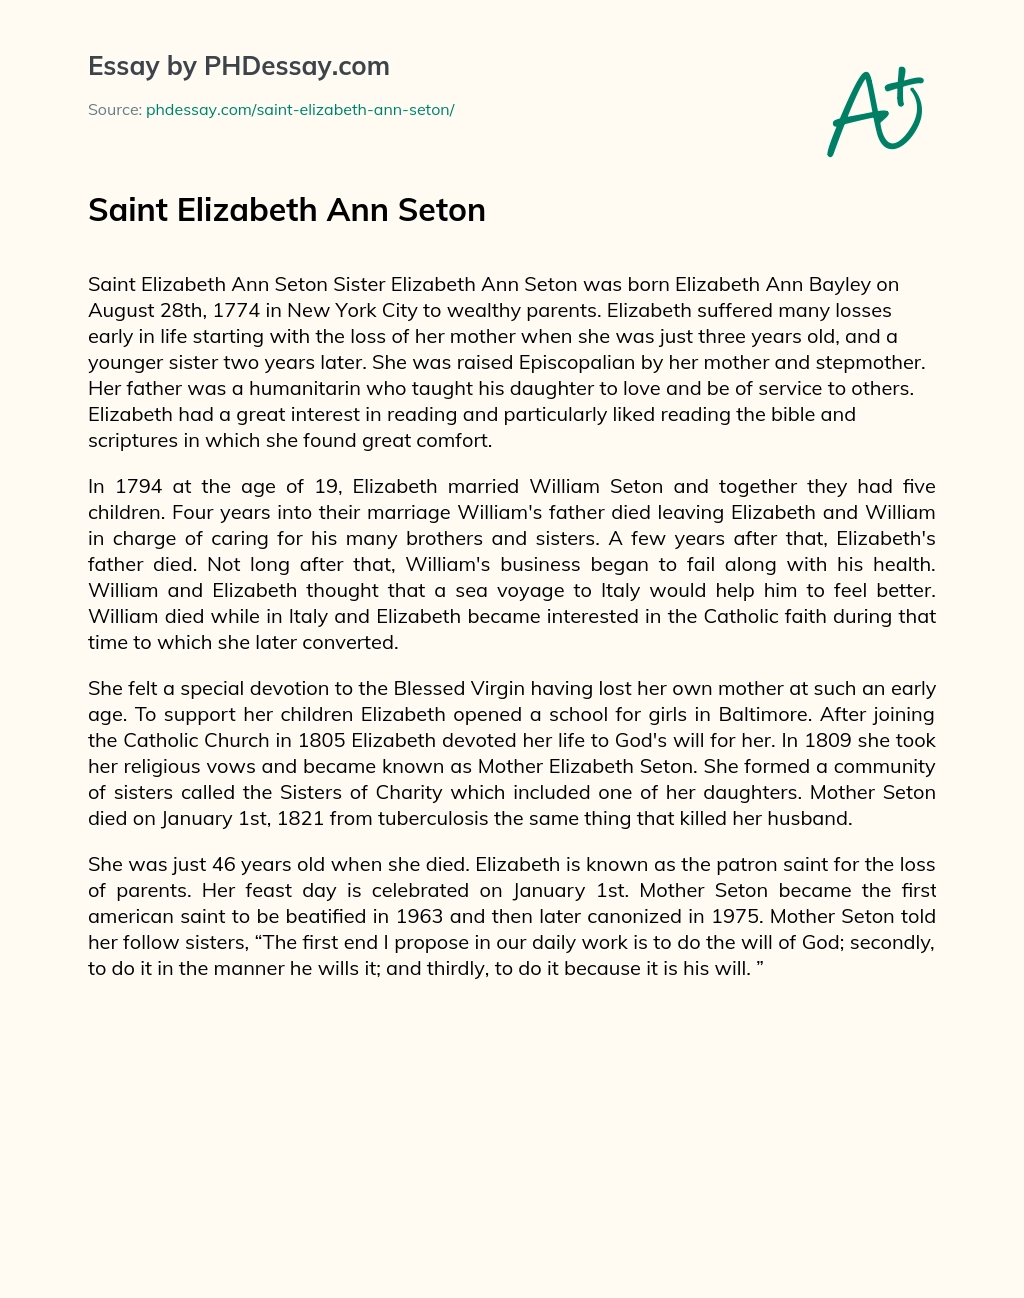 Saint Elizabeth Ann Seton essay